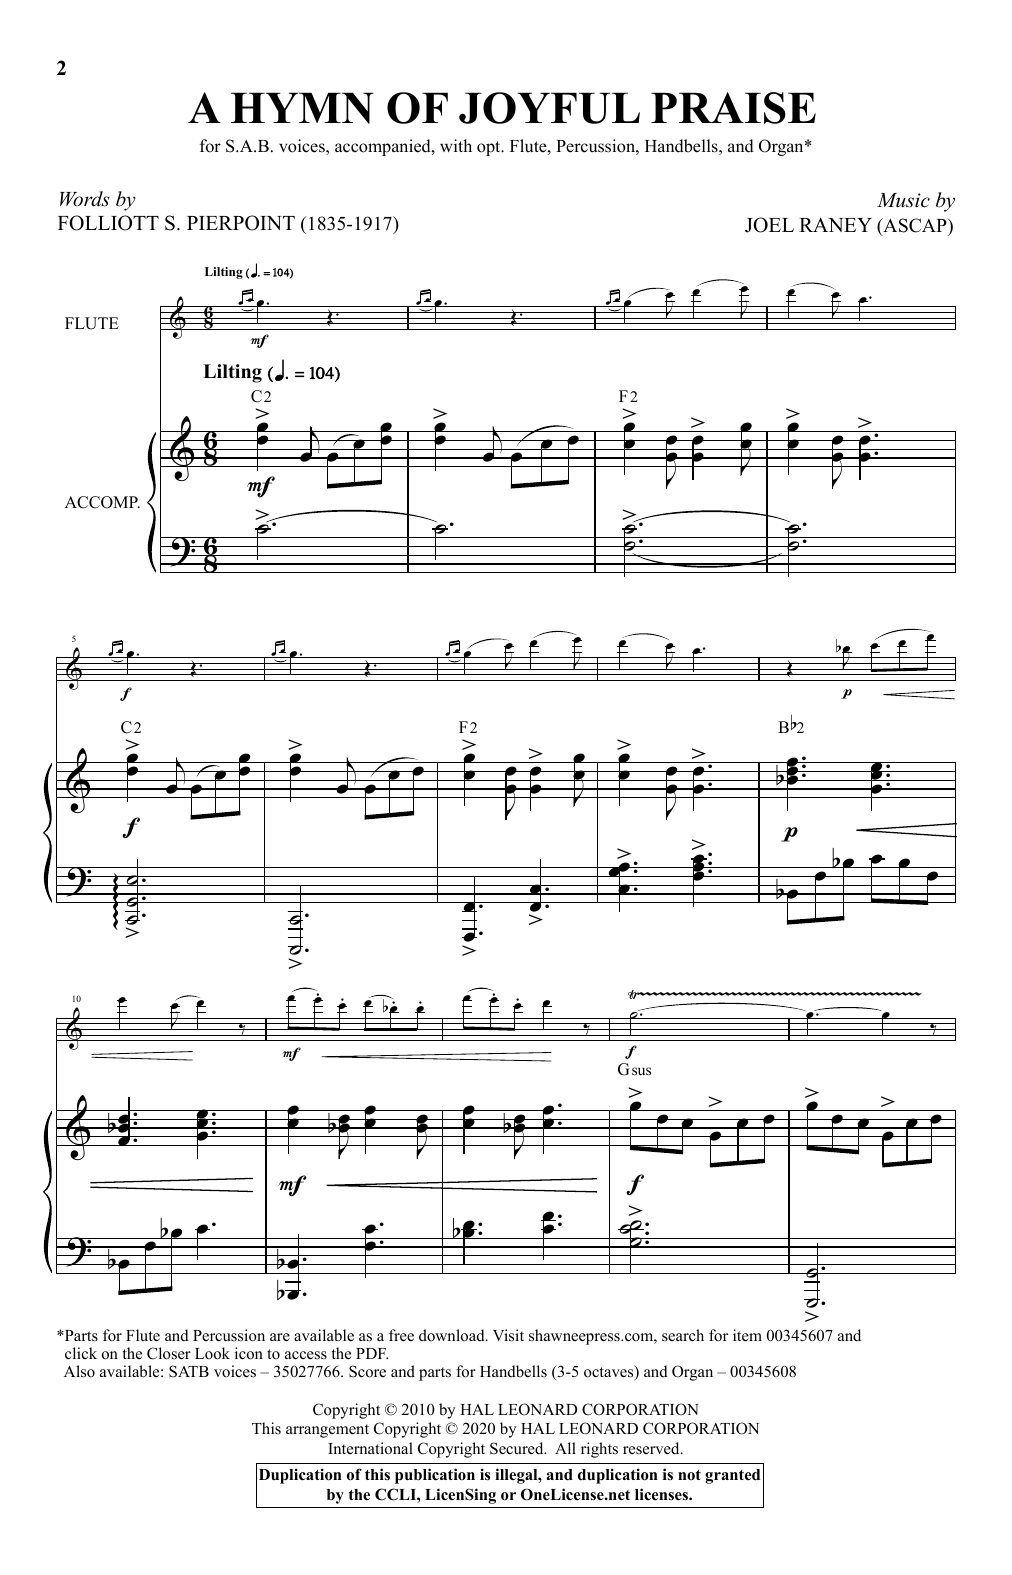 Folliott Pierpoint and Joel Raney A Hymn Of Joyful Praise sheet music notes and chords arranged for SATB Choir